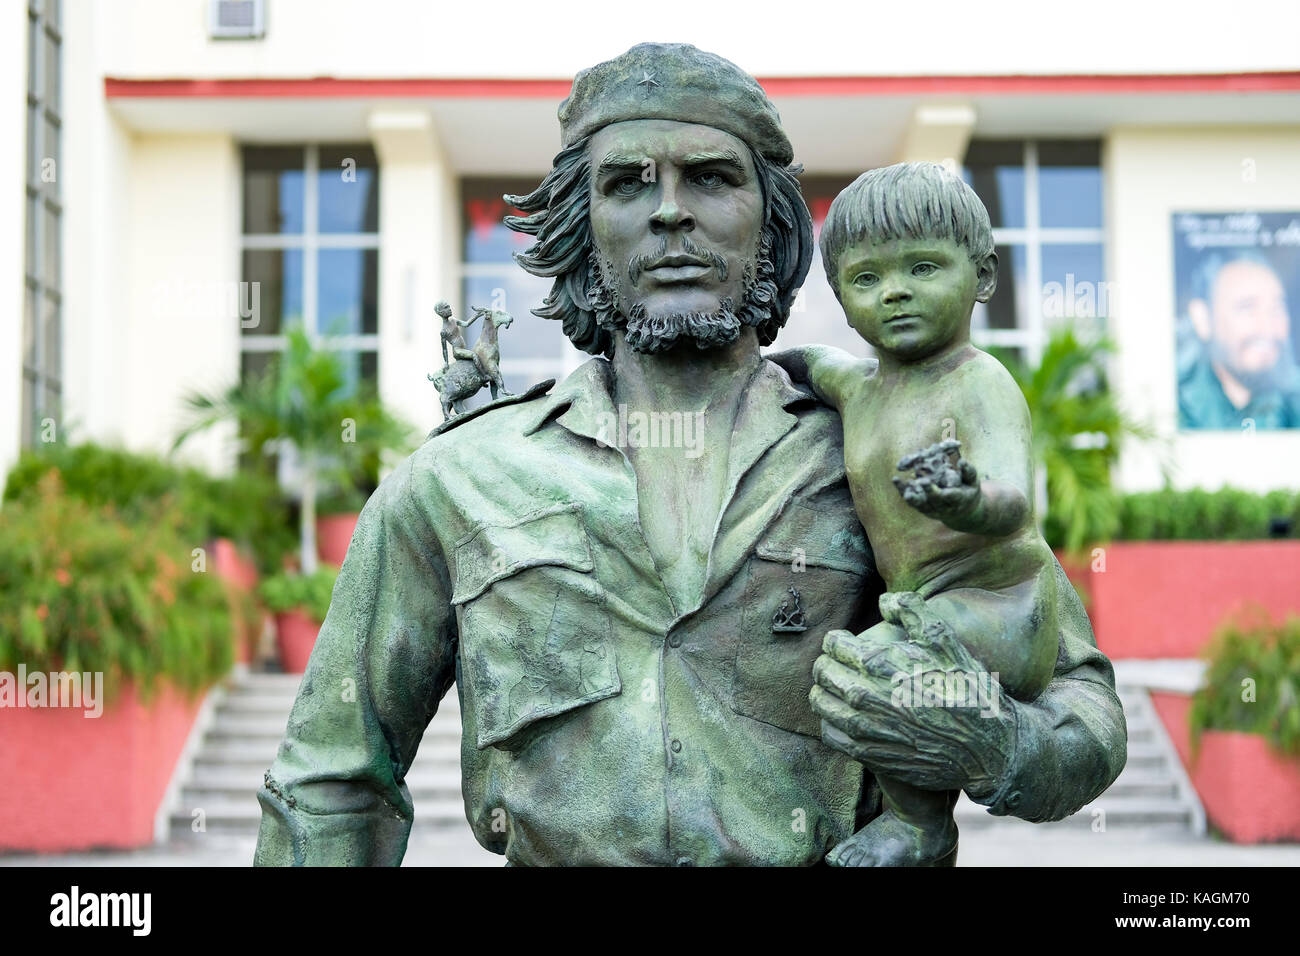 Estatua Che y Niño in Santa Clara, Cuba. The statue depicts Cuban revolutionary Che Guevara holding a young boy, symbolizing the next generation, on h Stock Photo